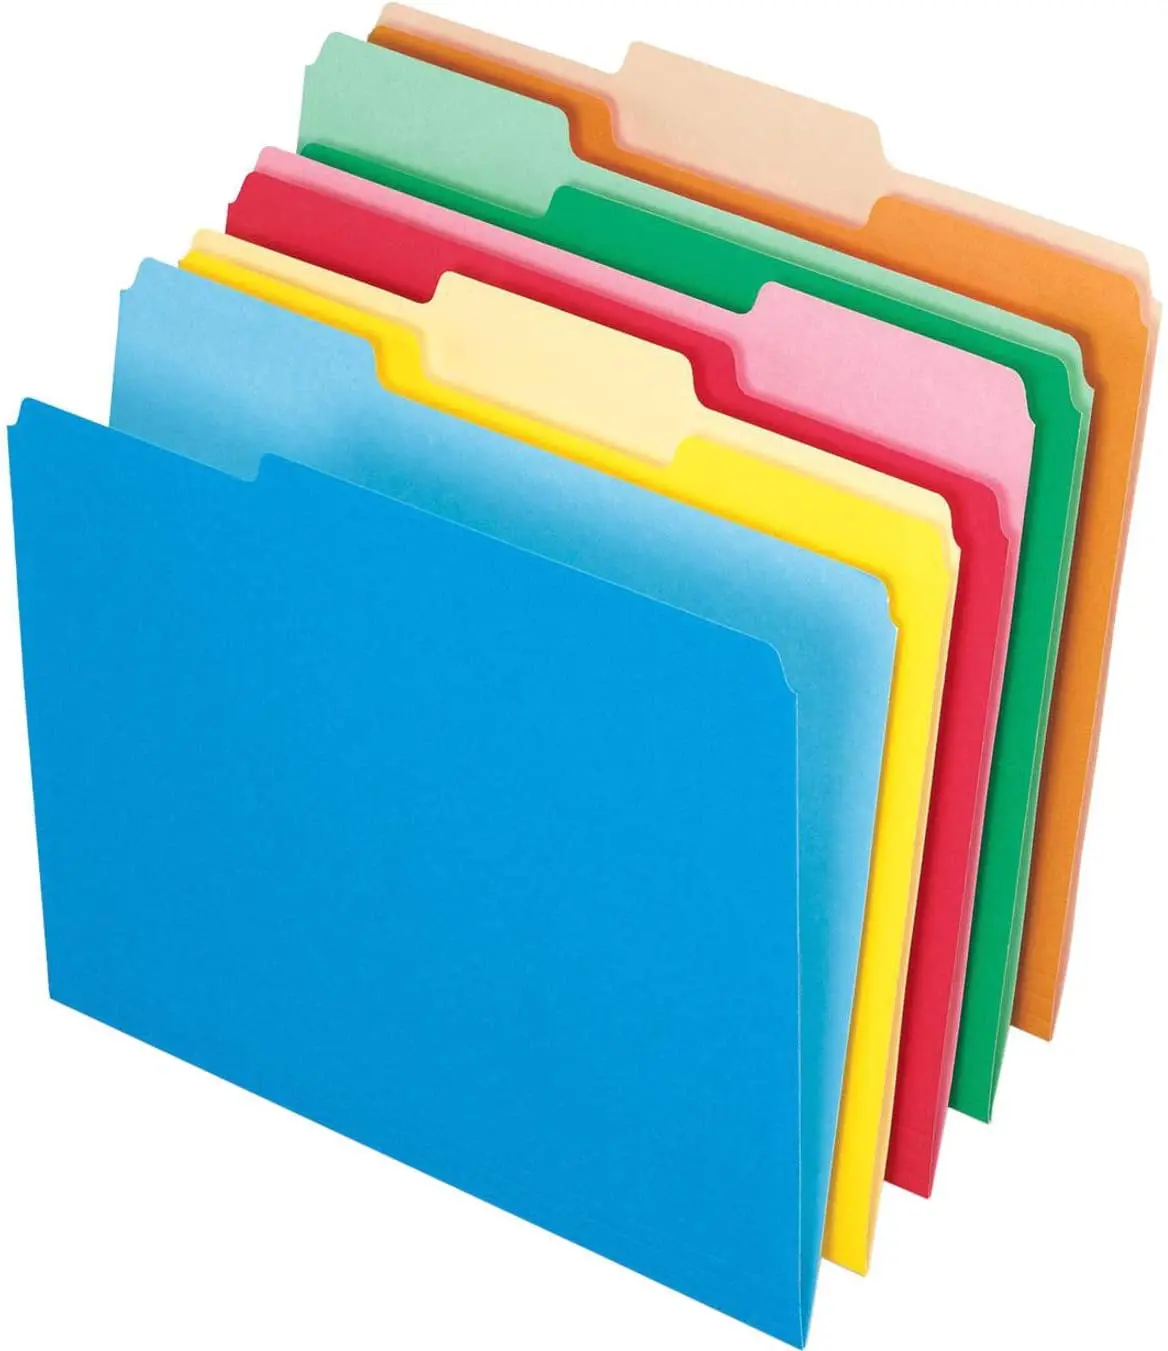 two-tone file folders3 (1).jpg